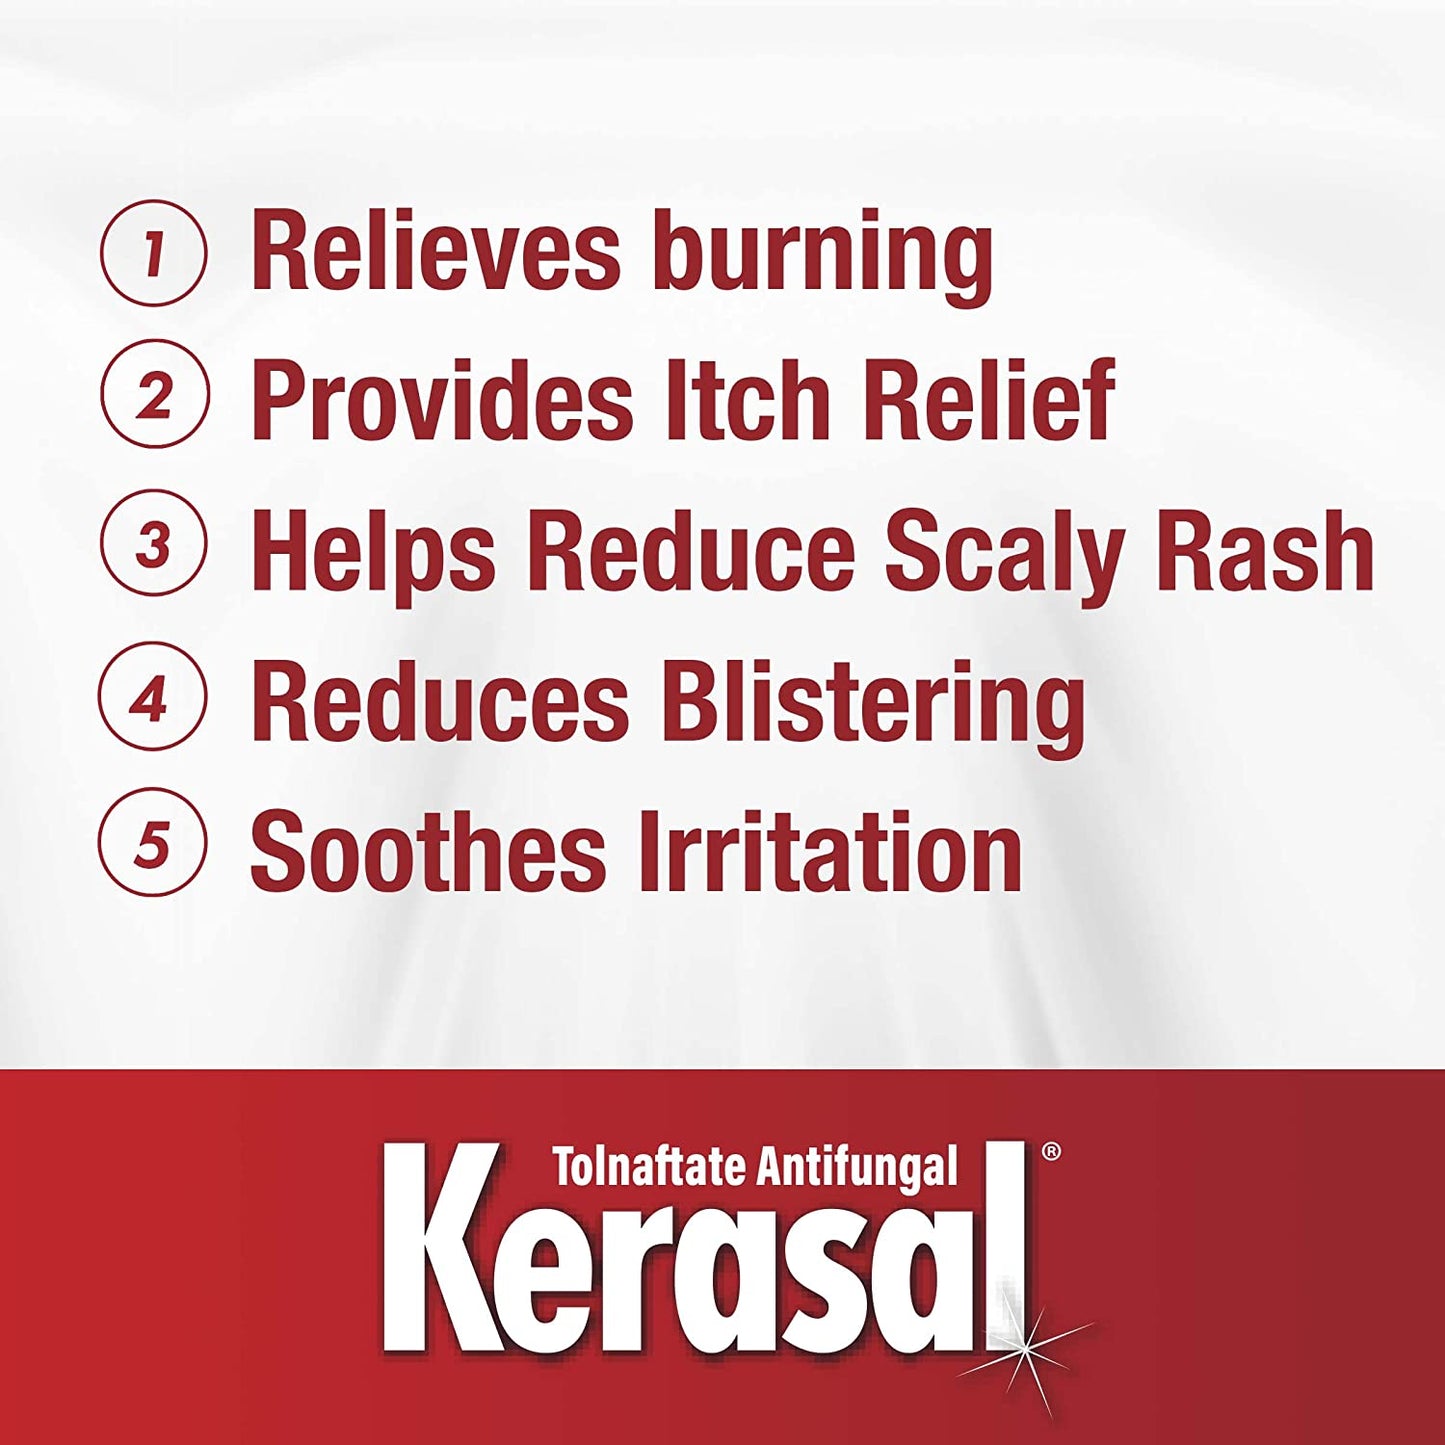 Kerasal Athlete'S Medicated Foot Soak, Bath for 5-In-1 Rapid Symptom Relief, 12 Count, (Pack of 1)